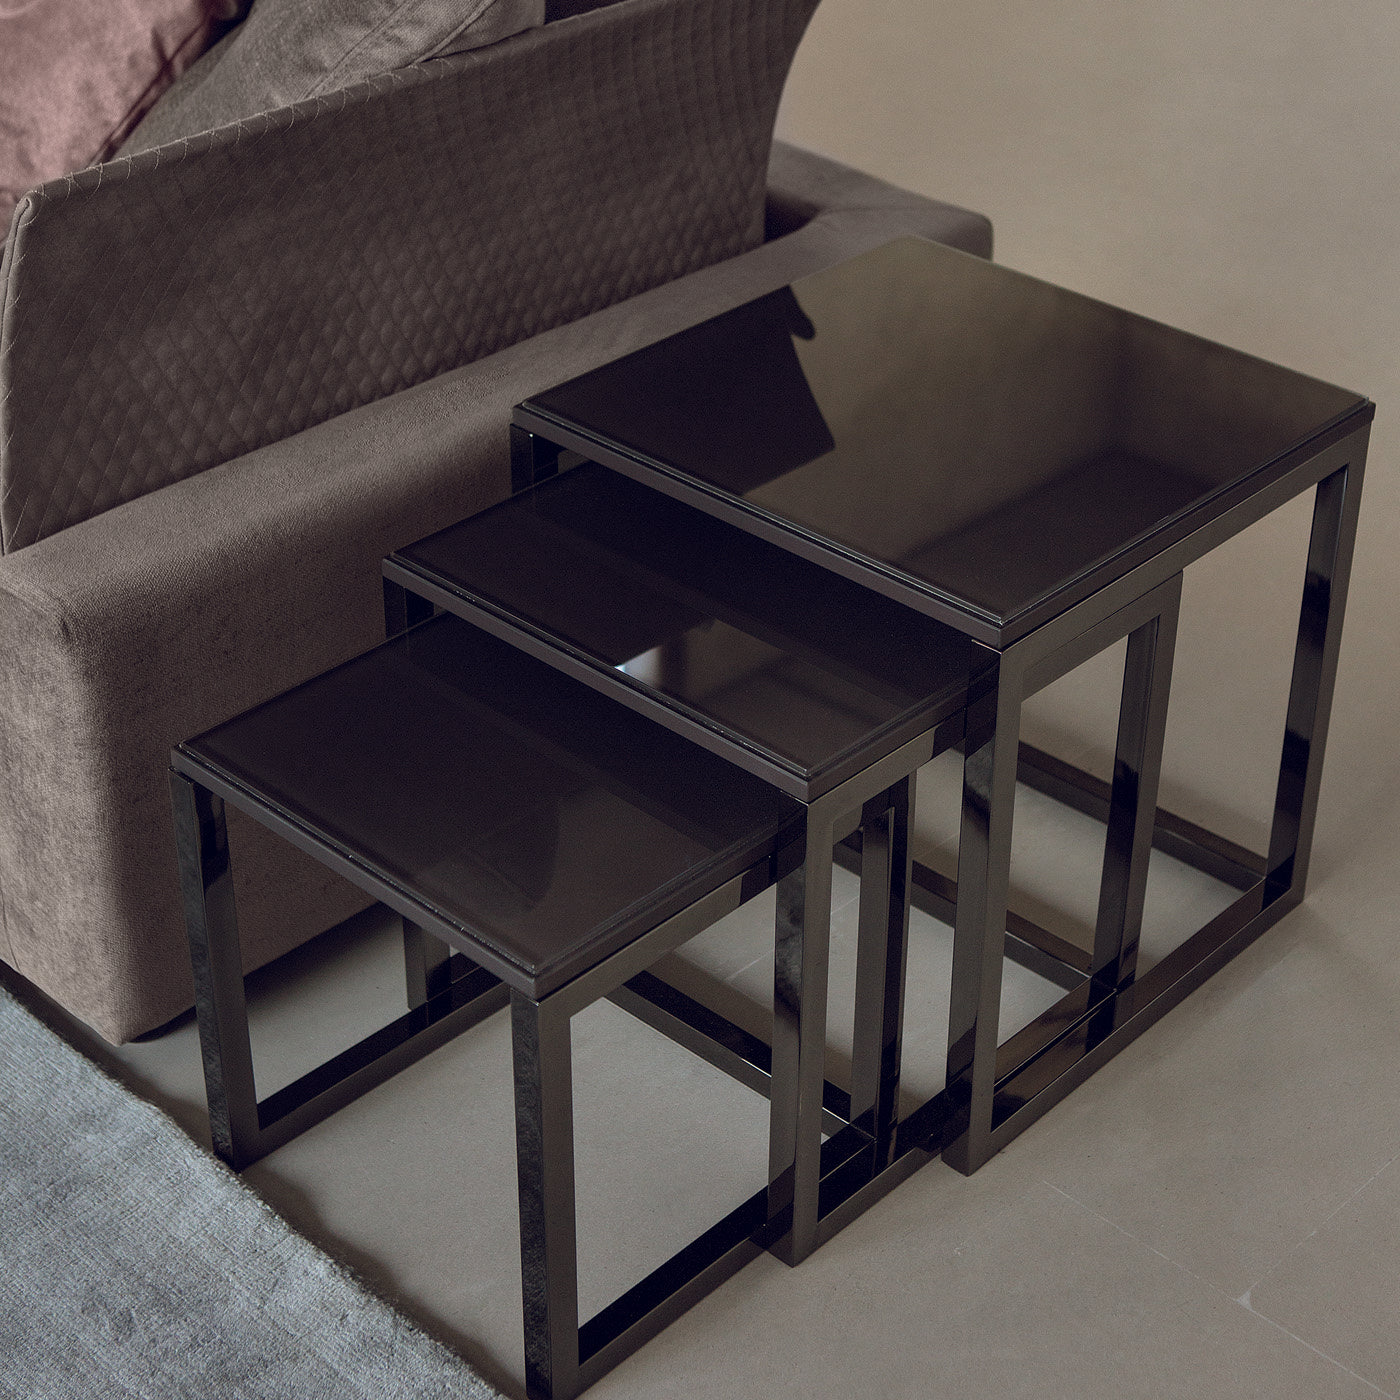 Set of 3 Mondrian Nesting Tables - Alternative view 1